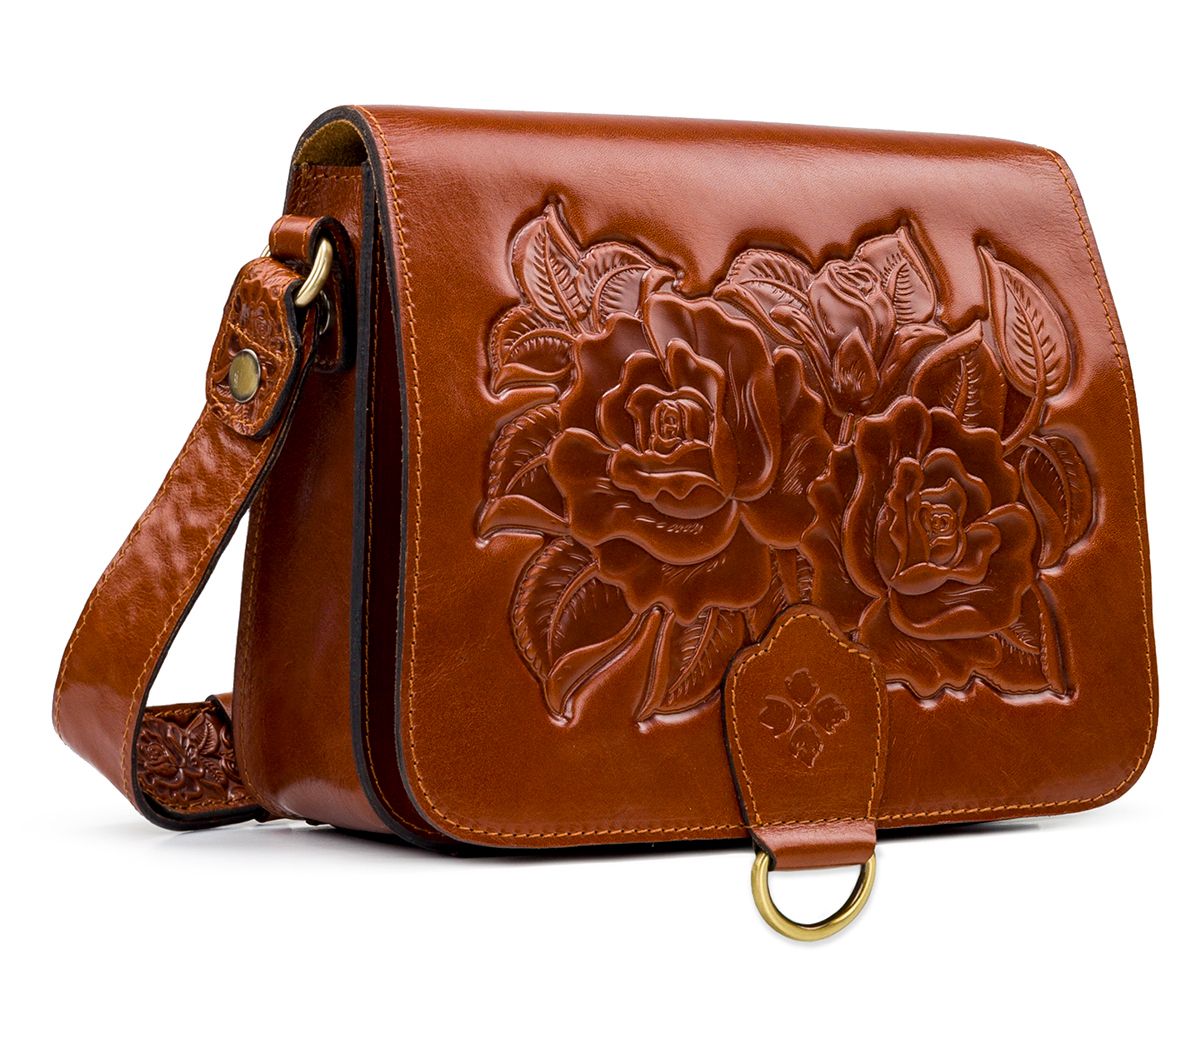 Patricia Nash Ilina Crossbody Bag, Leather